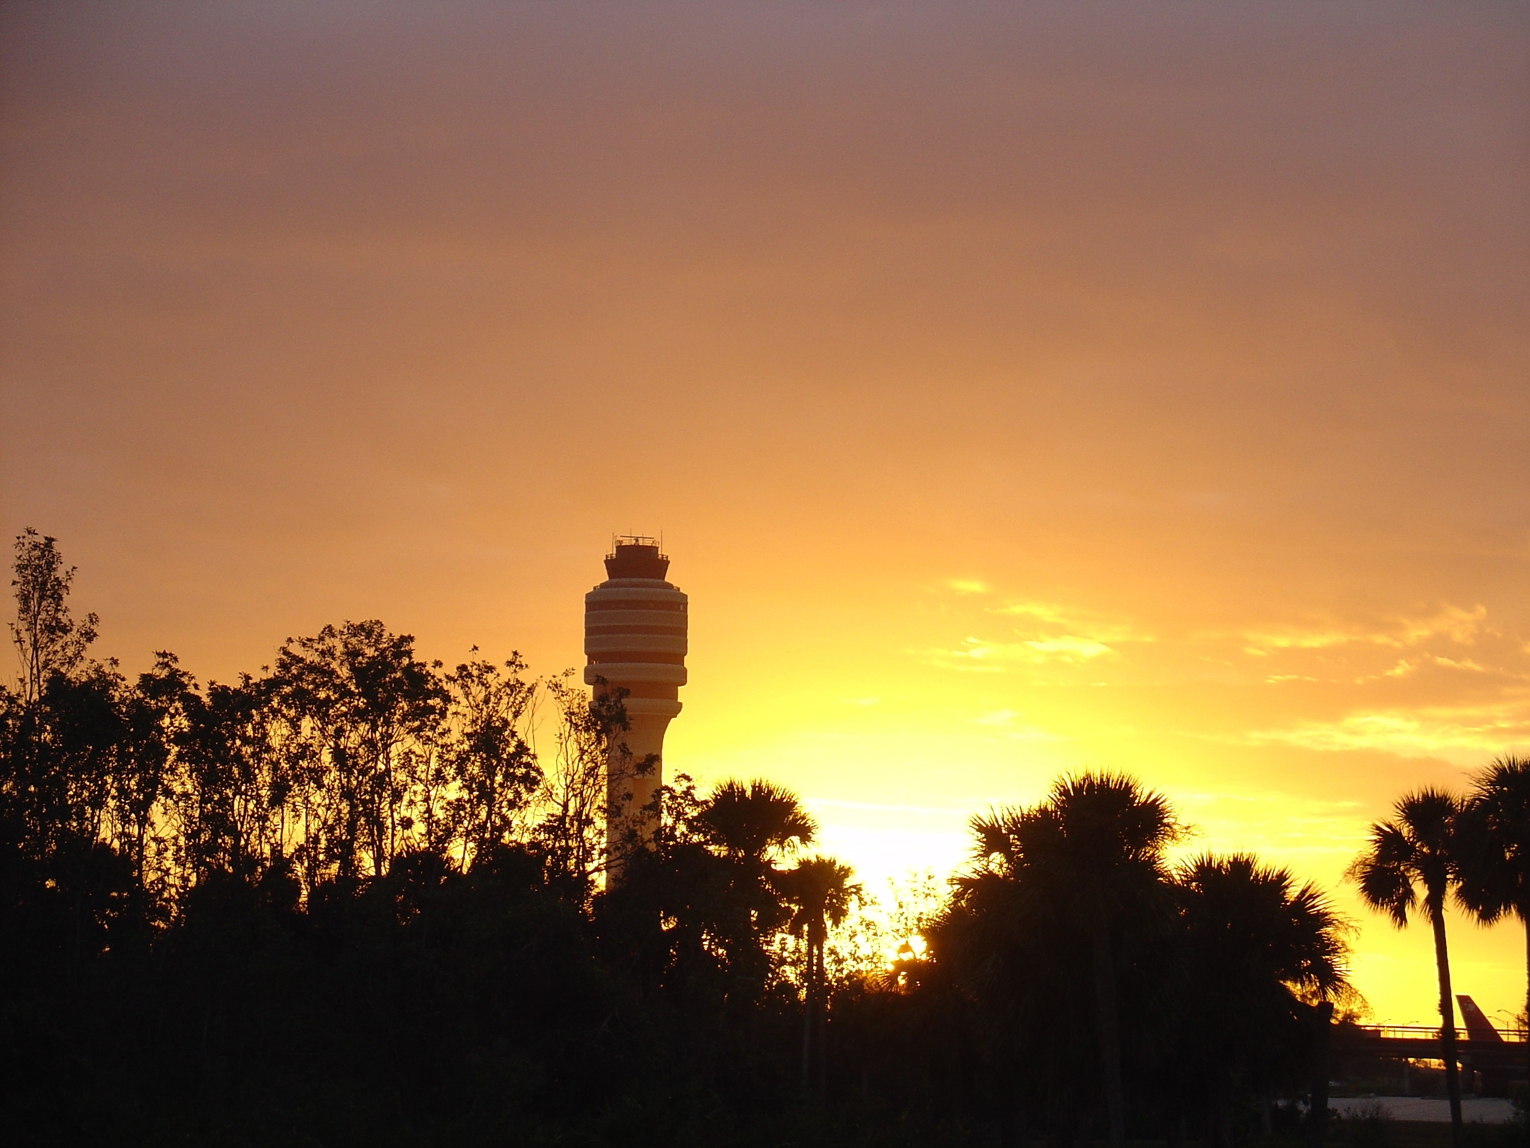 FAA Tower at Sunrise